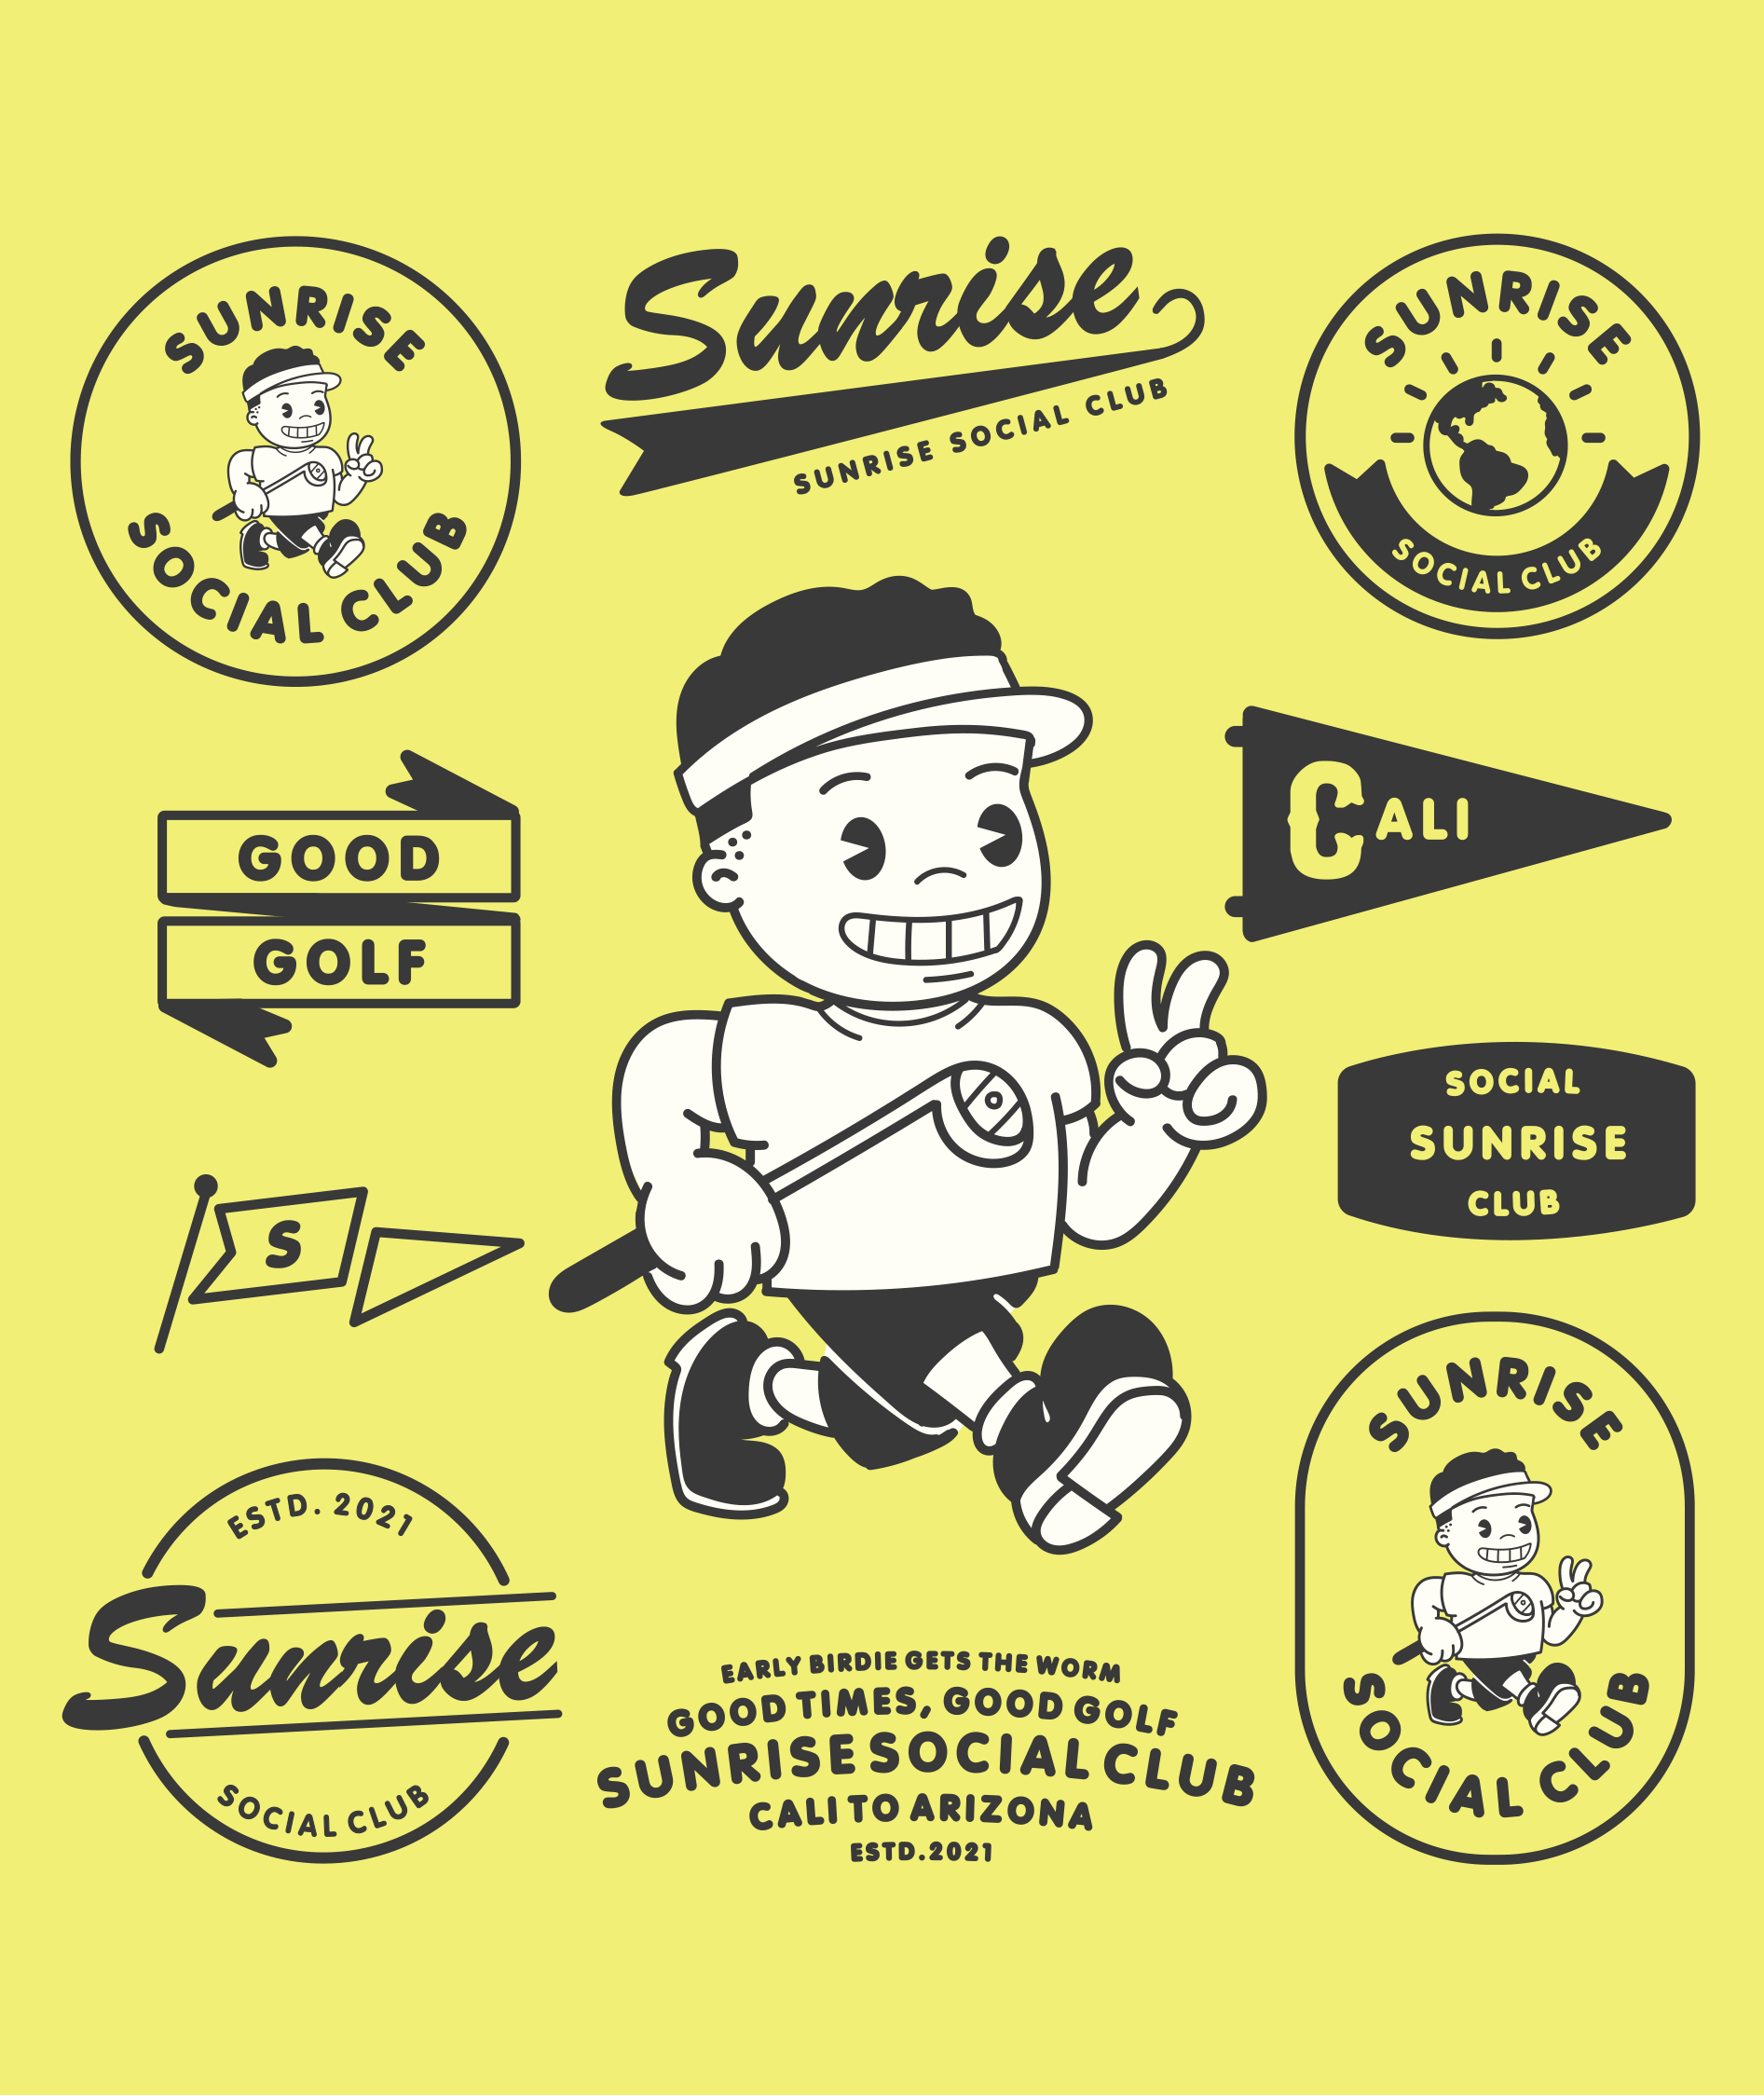 Sunrise-Social-Club-2.png